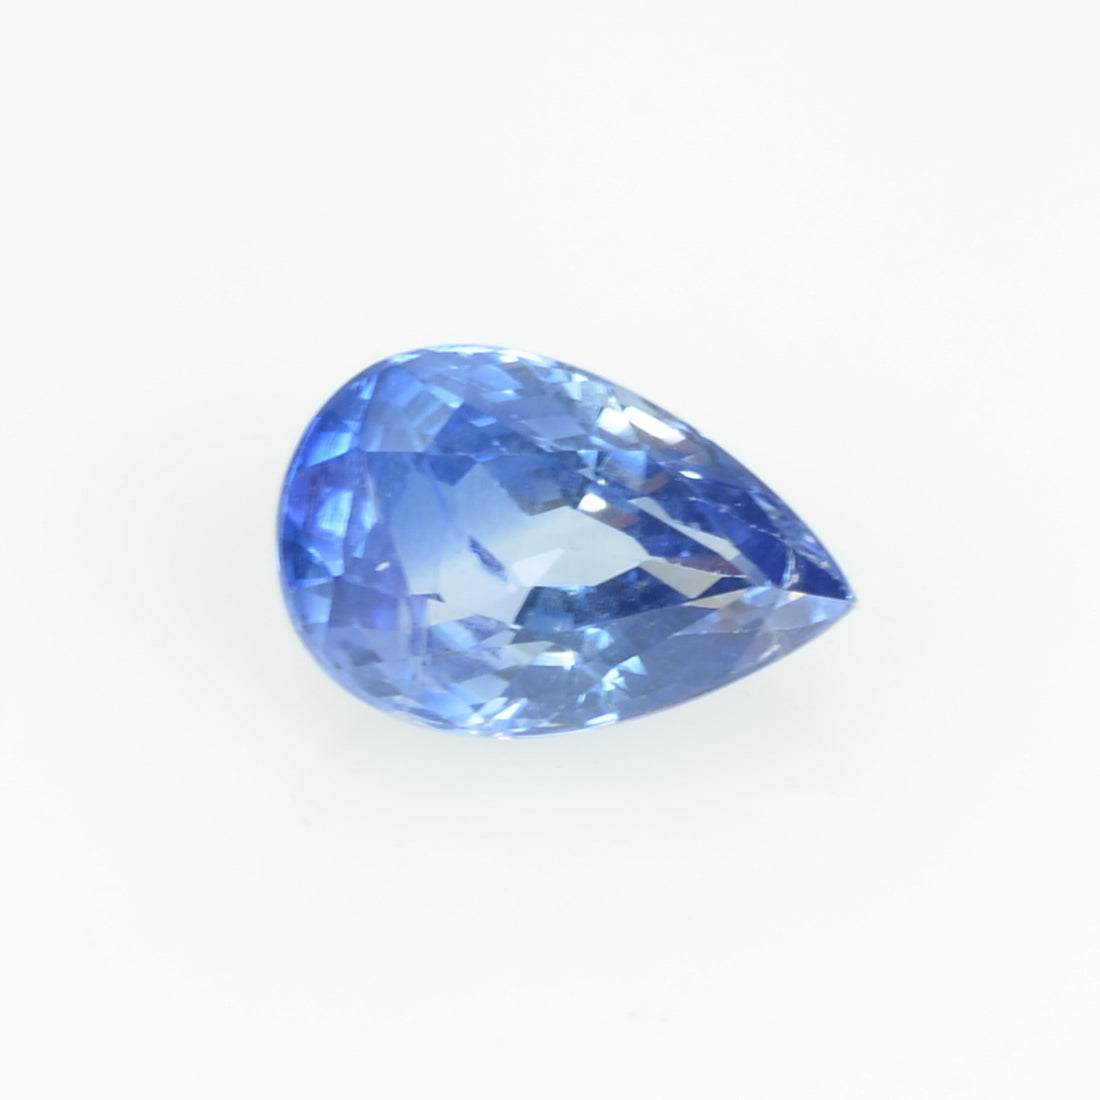 1.23 Cts Natural Blue Sapphire Loose Gemstone Pear Cut - Thai Gems Export Ltd.